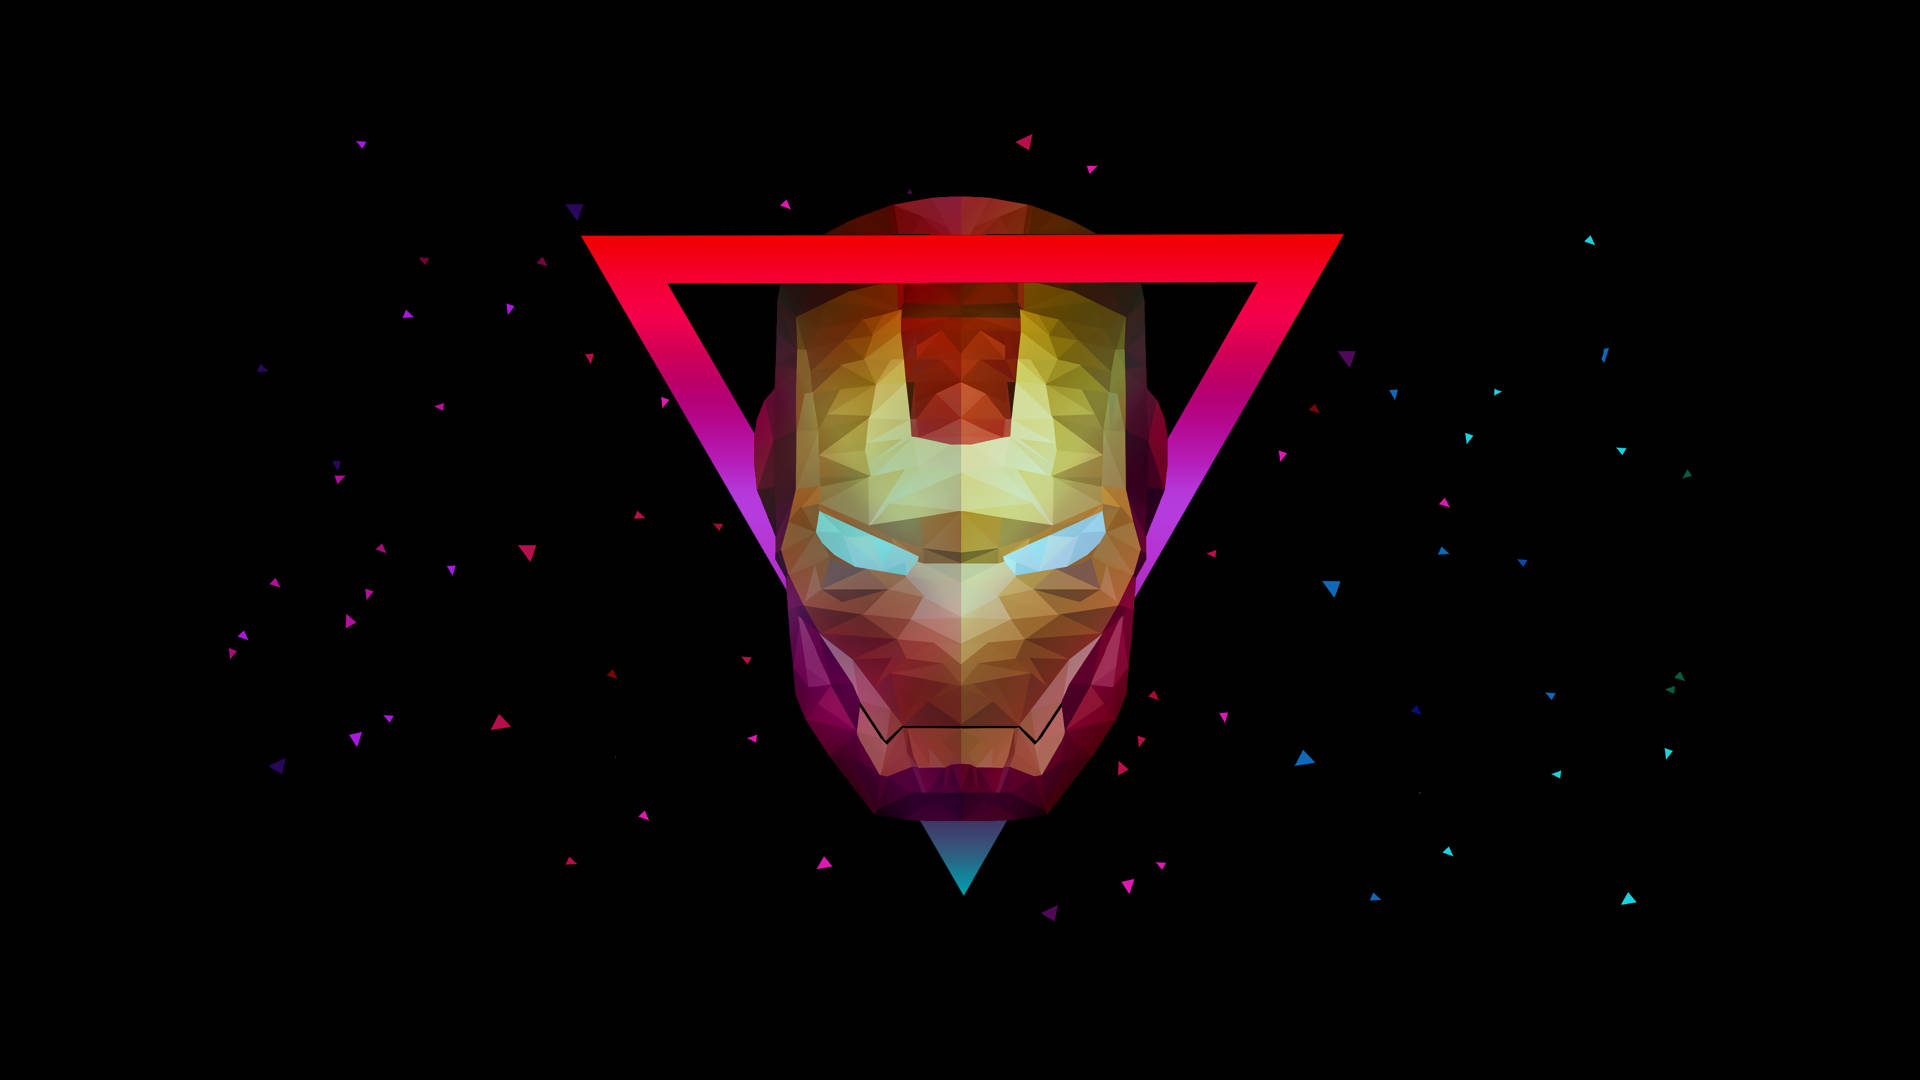 Triangle Iron Man Full Hd Wallpaper